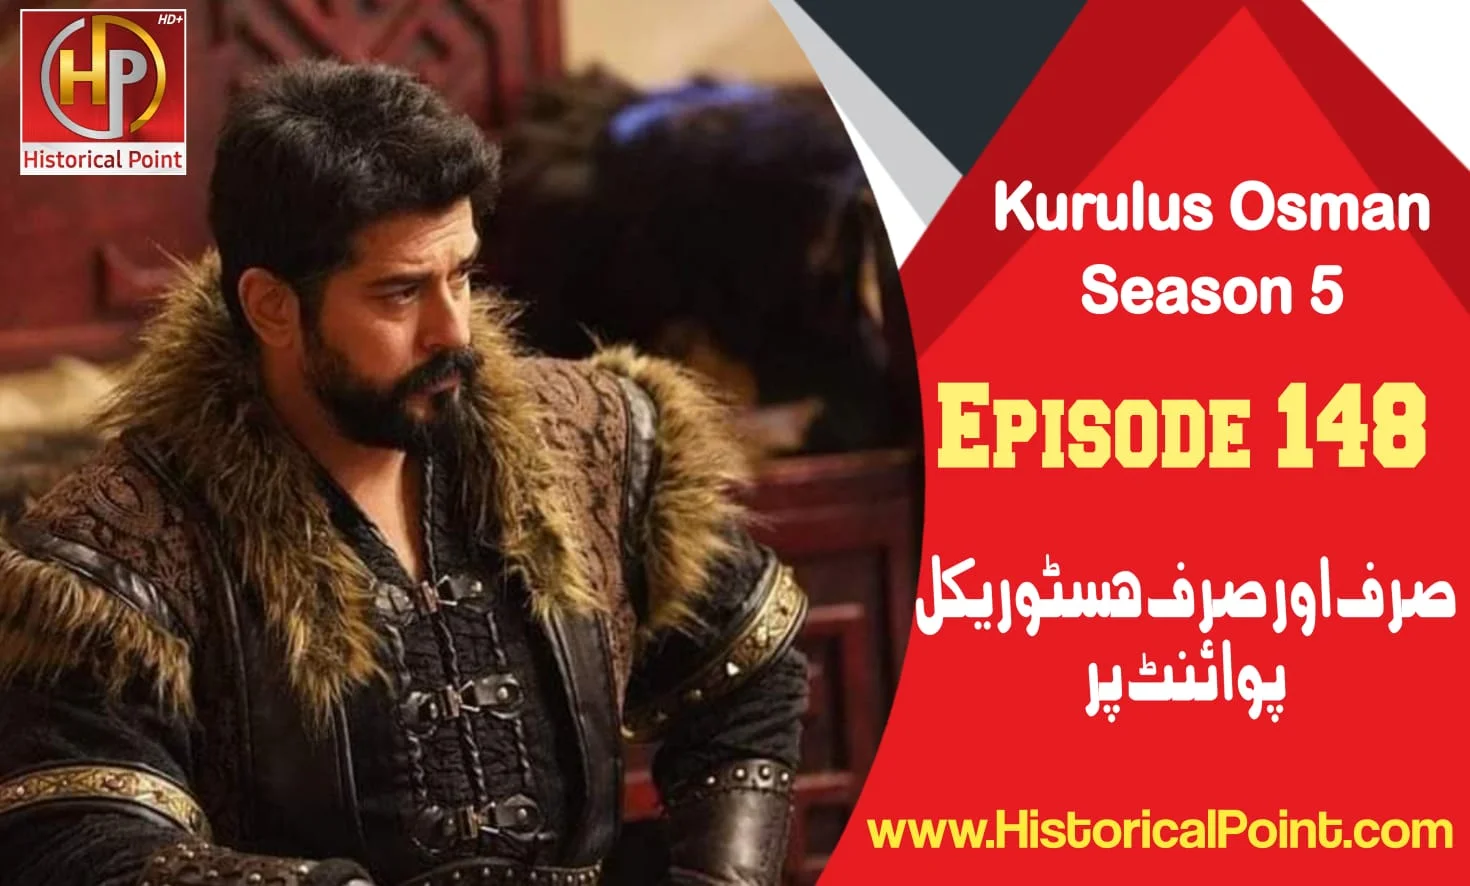 Kurulus Osman Episode 148 review in urdu